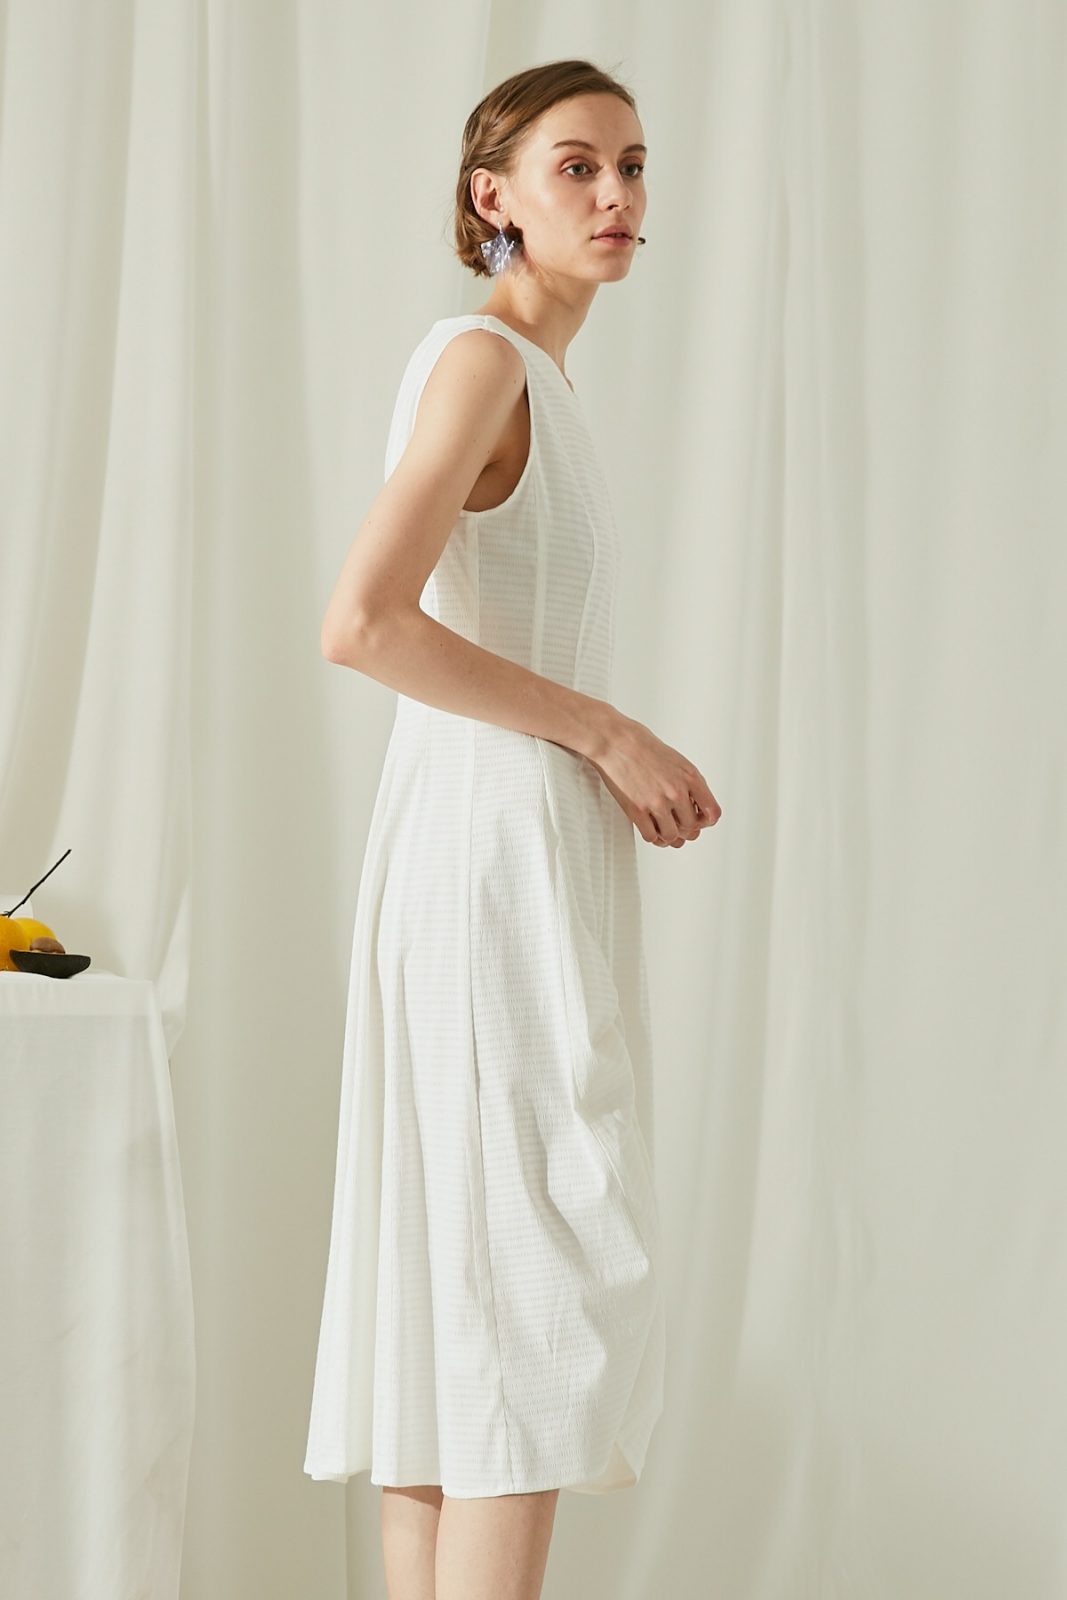 SKYE San Francisco SF ethical modern minimalist quality women clothing fashion Juliette Drawstring Dress white 5